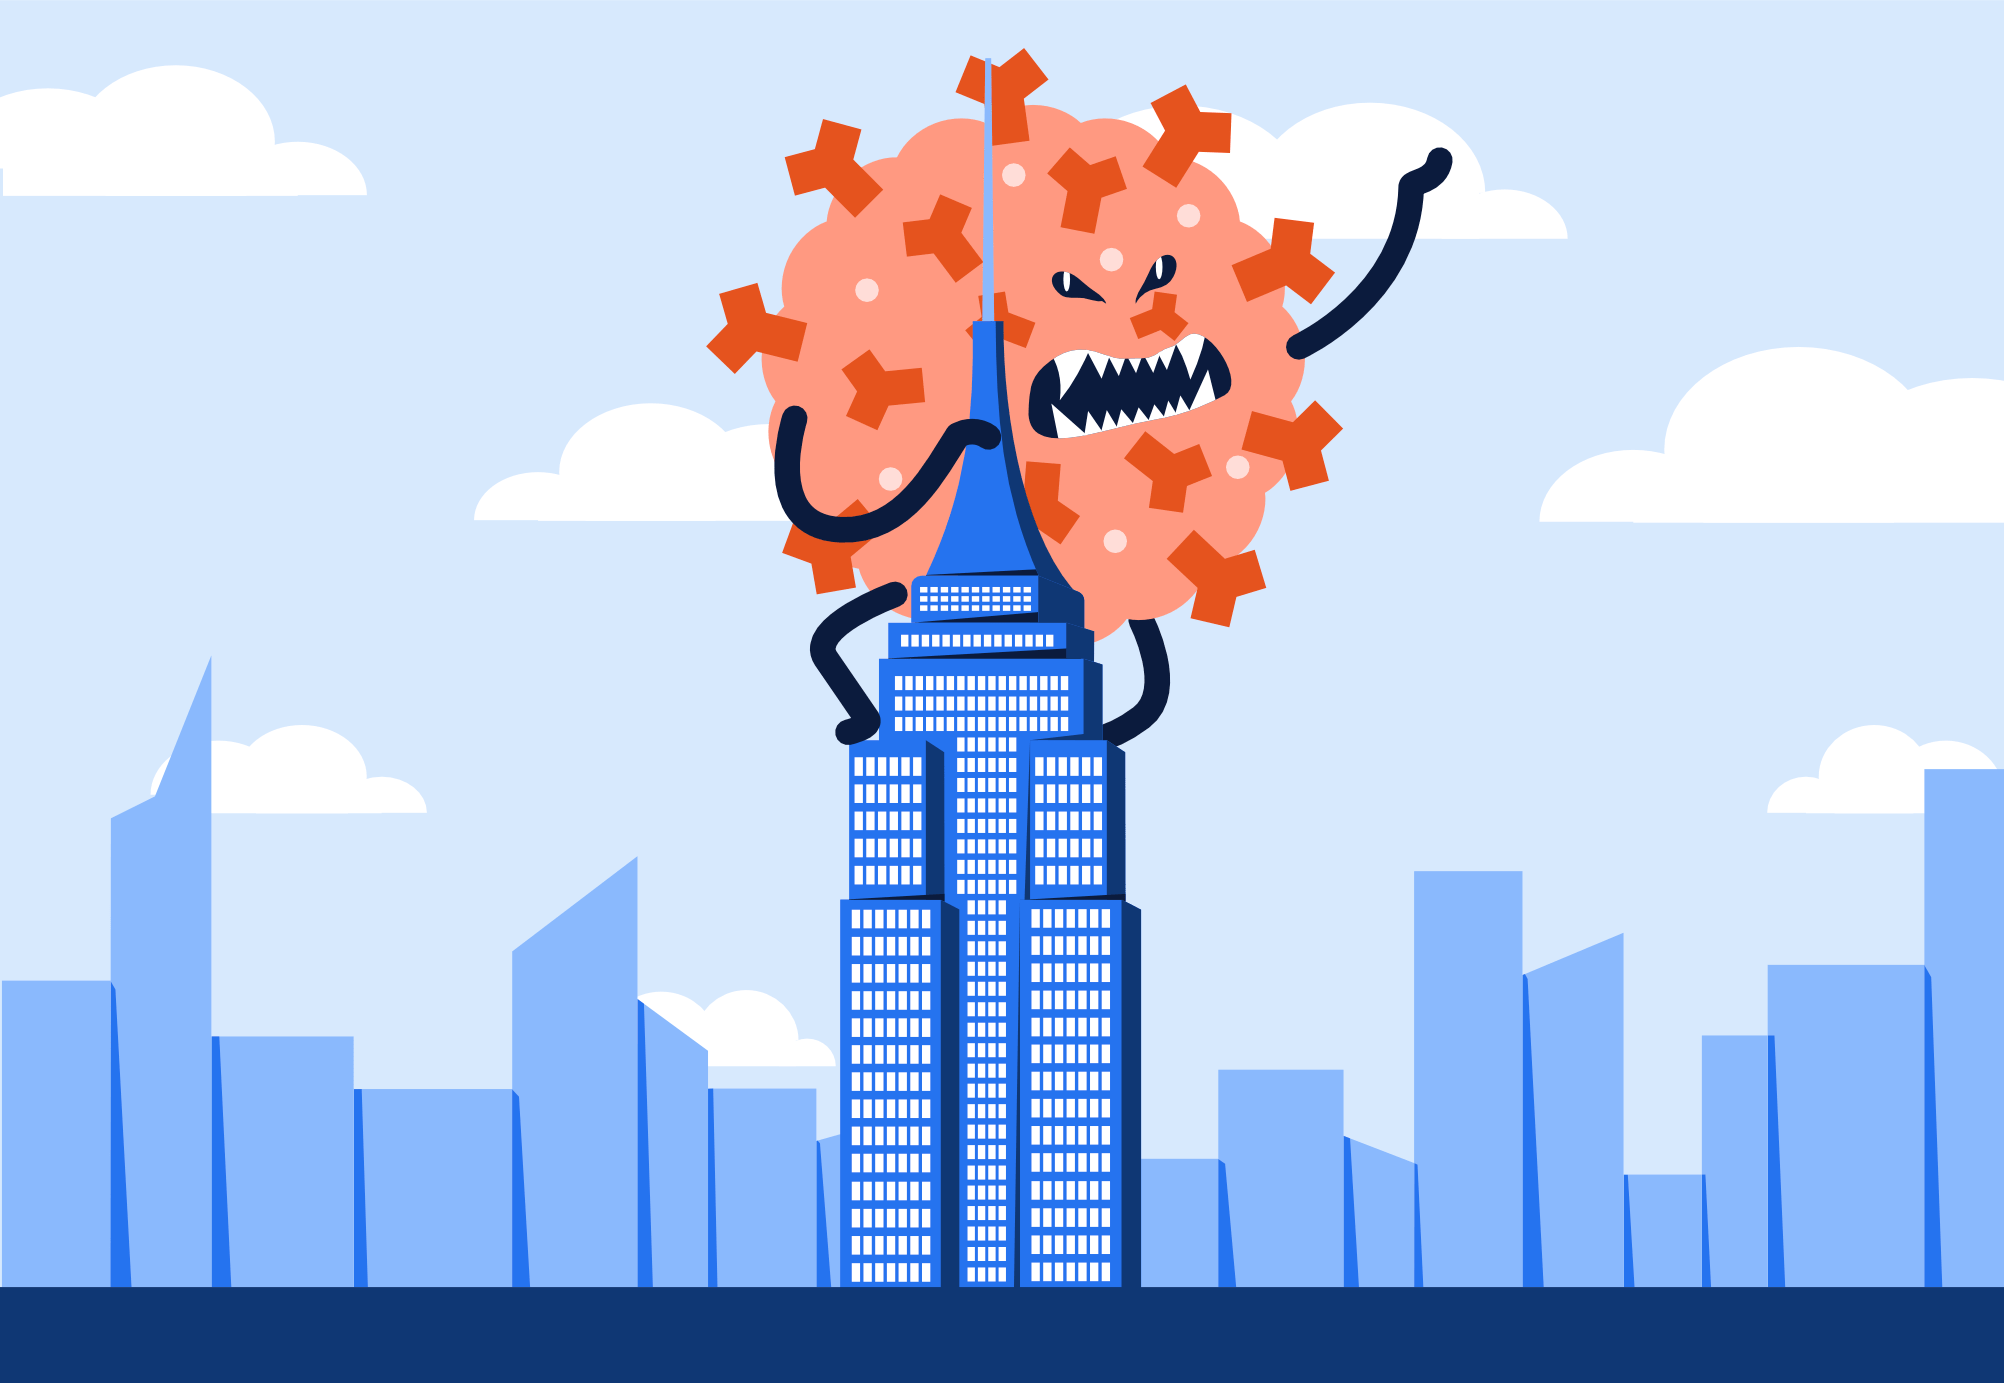 Coronavirus climbing the Empire State Building like King Kong